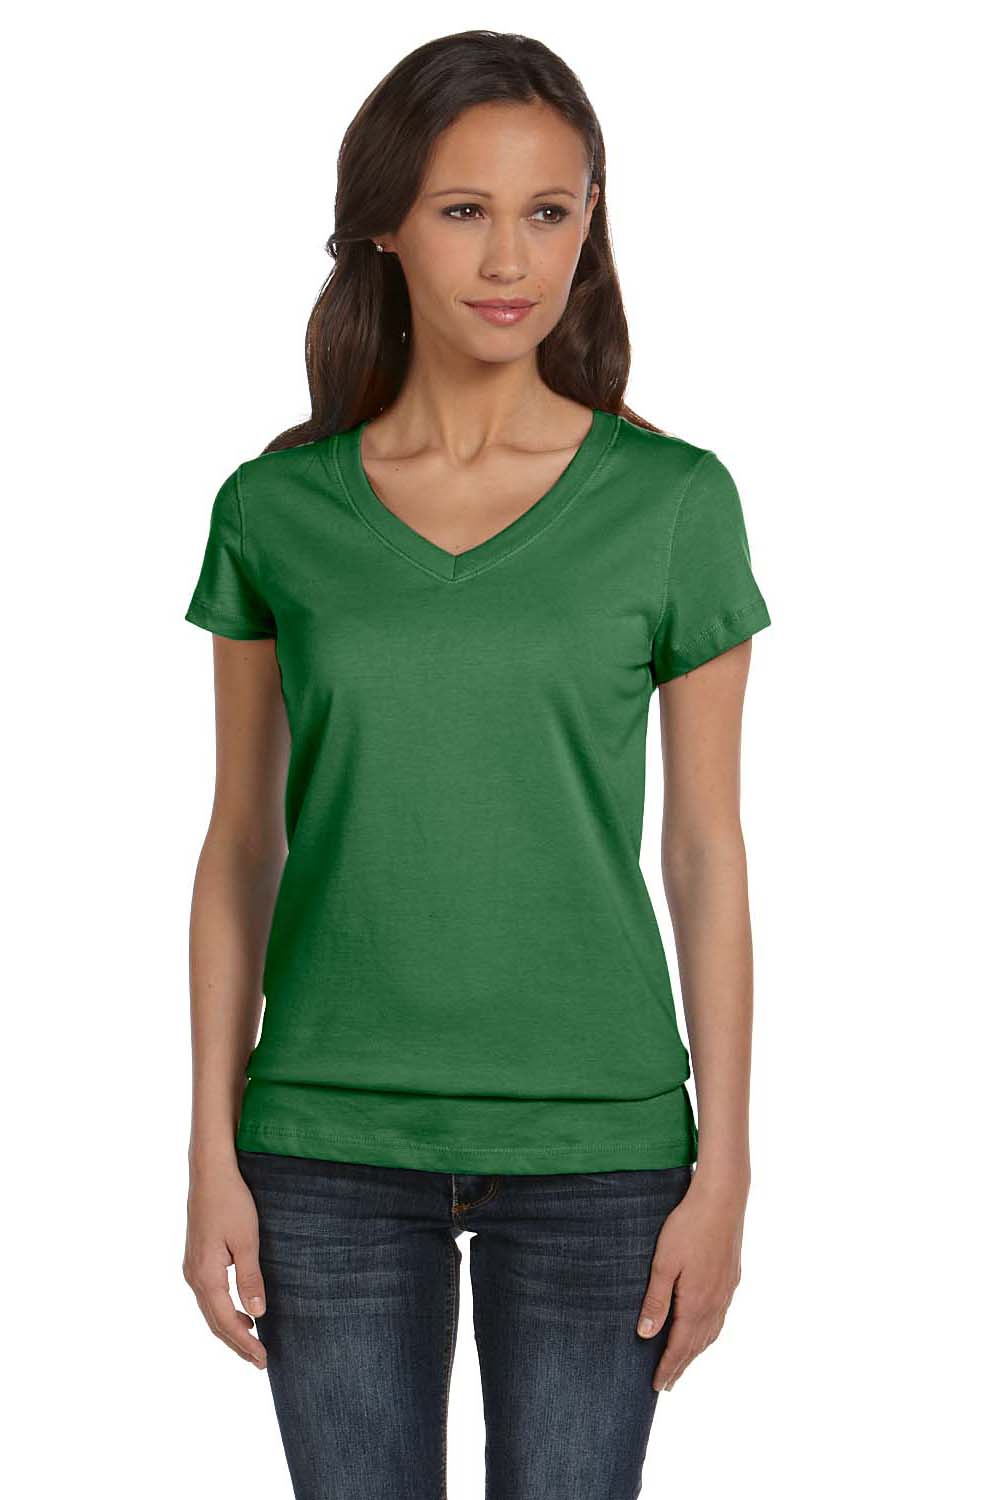 Bella + Canvas B6005 Womens Jersey Short Sleeve V-Neck T-Shirt Leaf Green Front